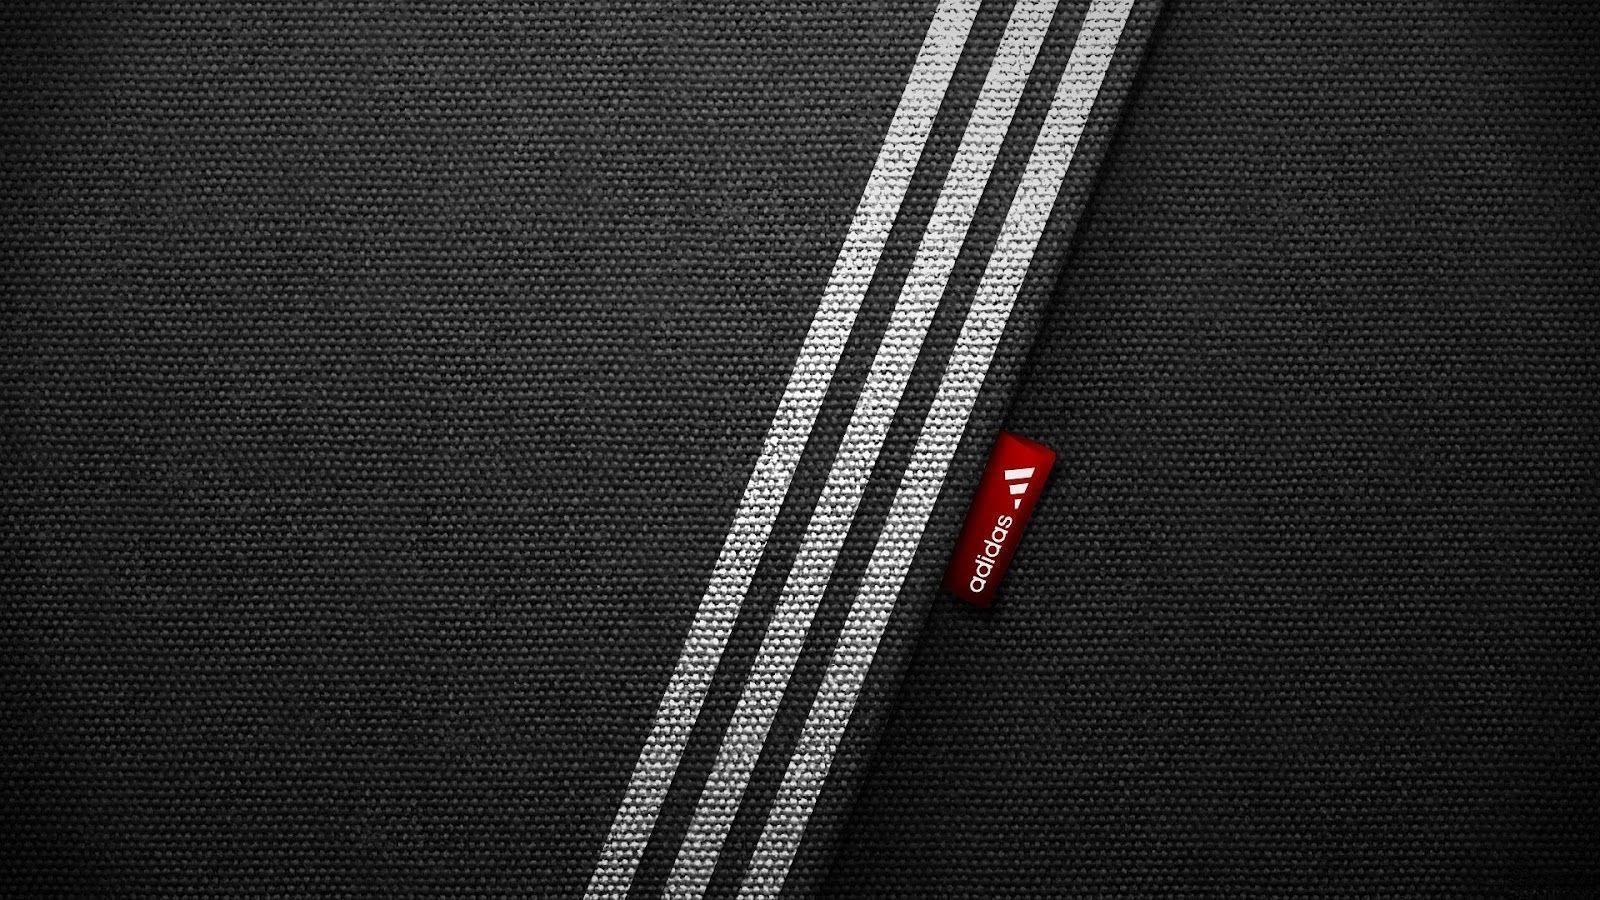 Adidas Logo HD Wallpaper Download Free Wallpaper in HD